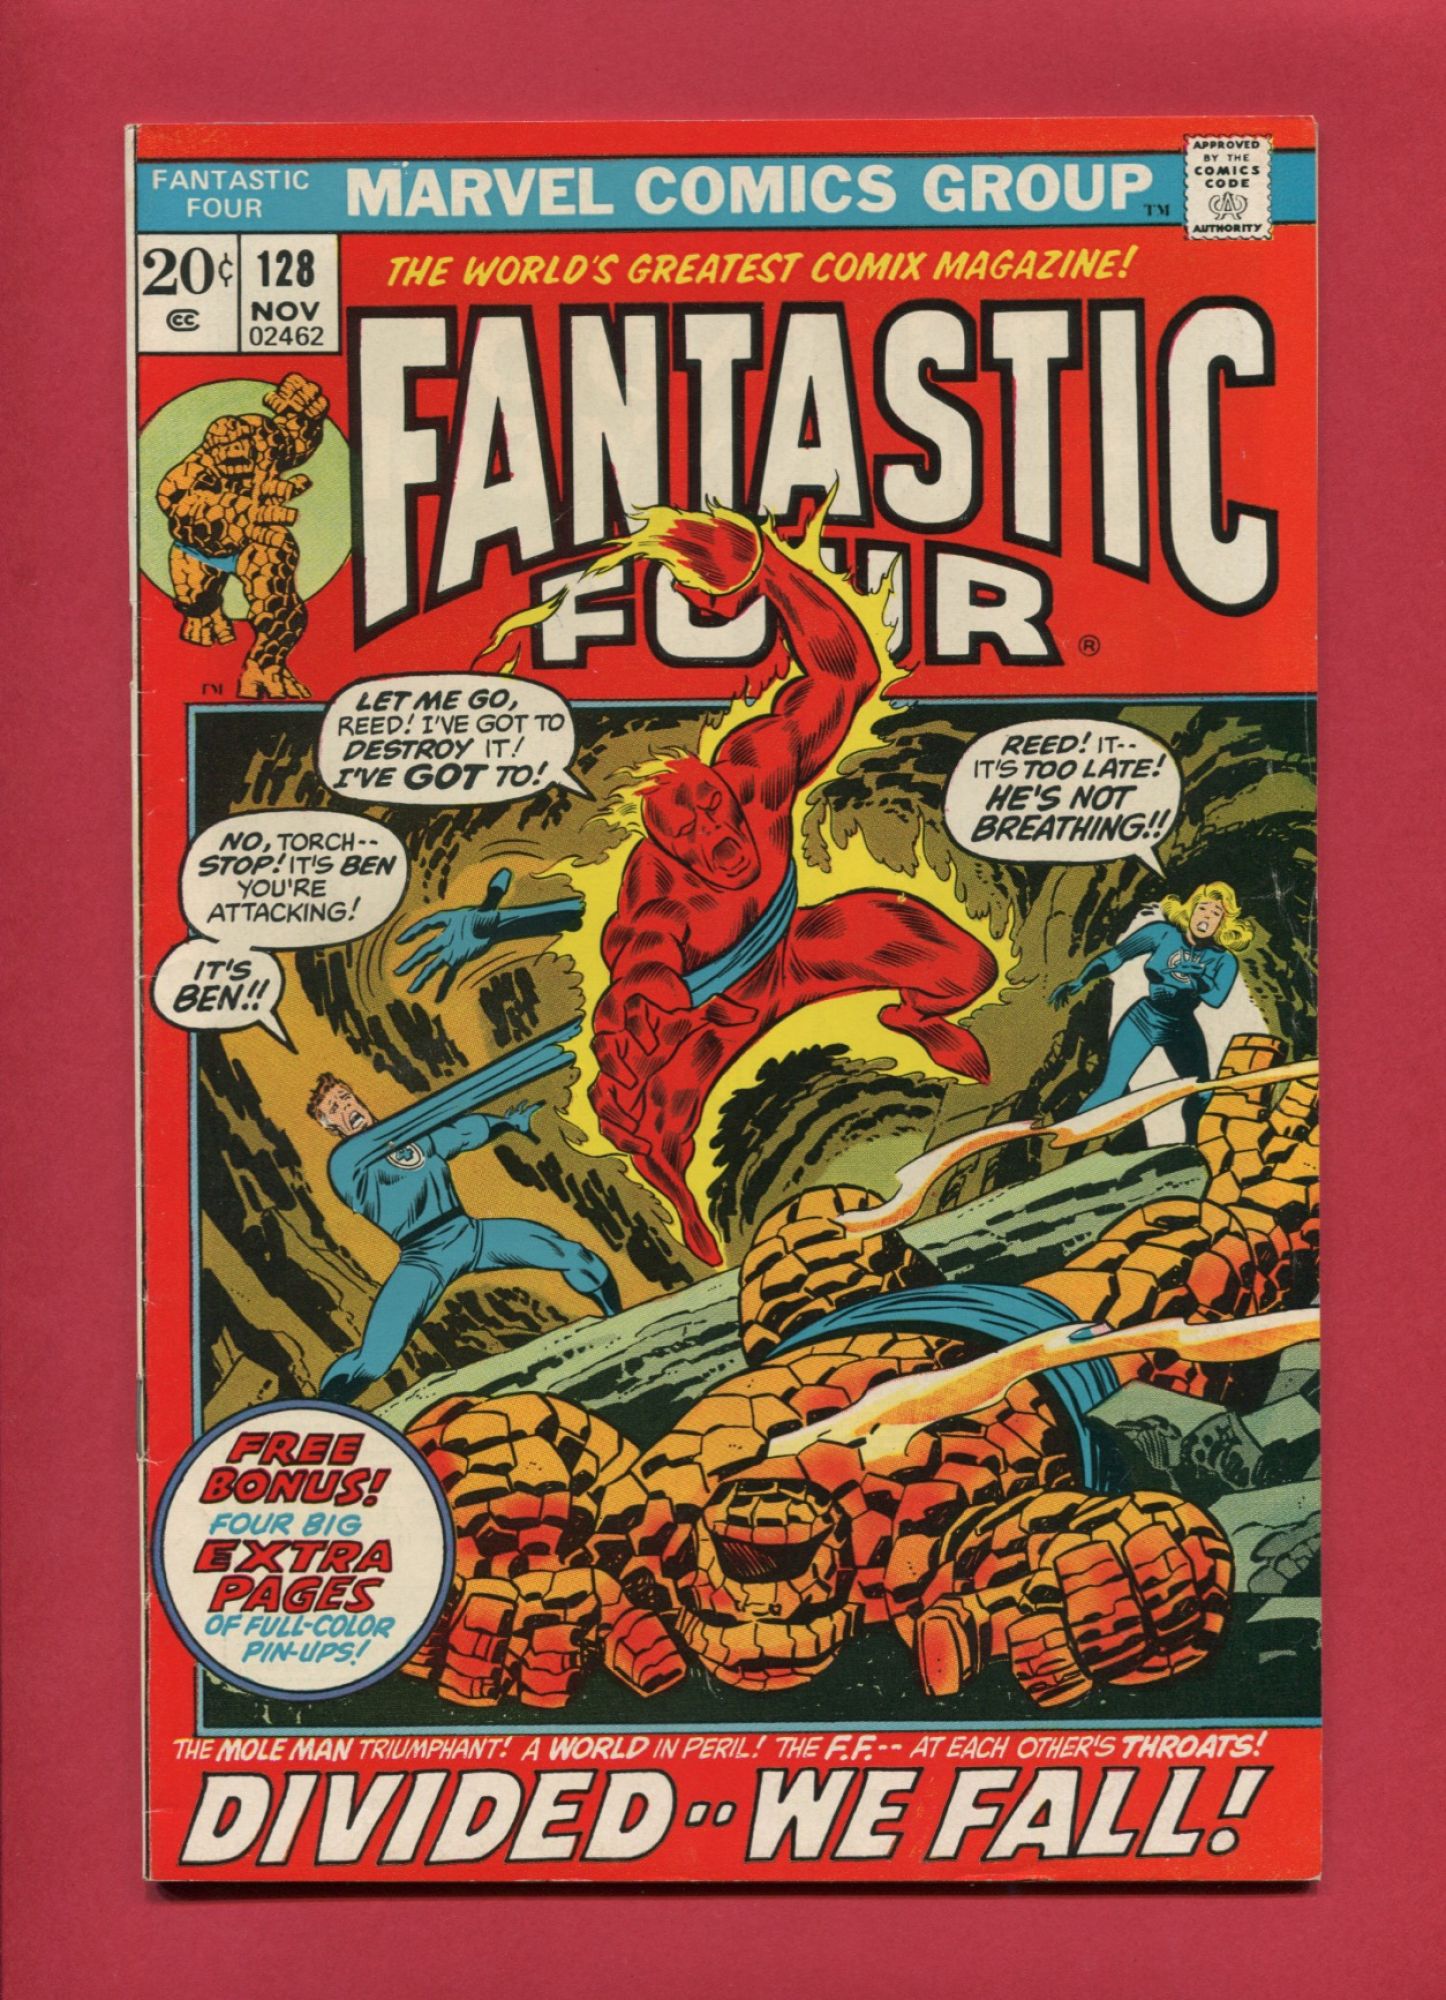 Fantastic Four #128, Nov 1972, 6.5 FN+